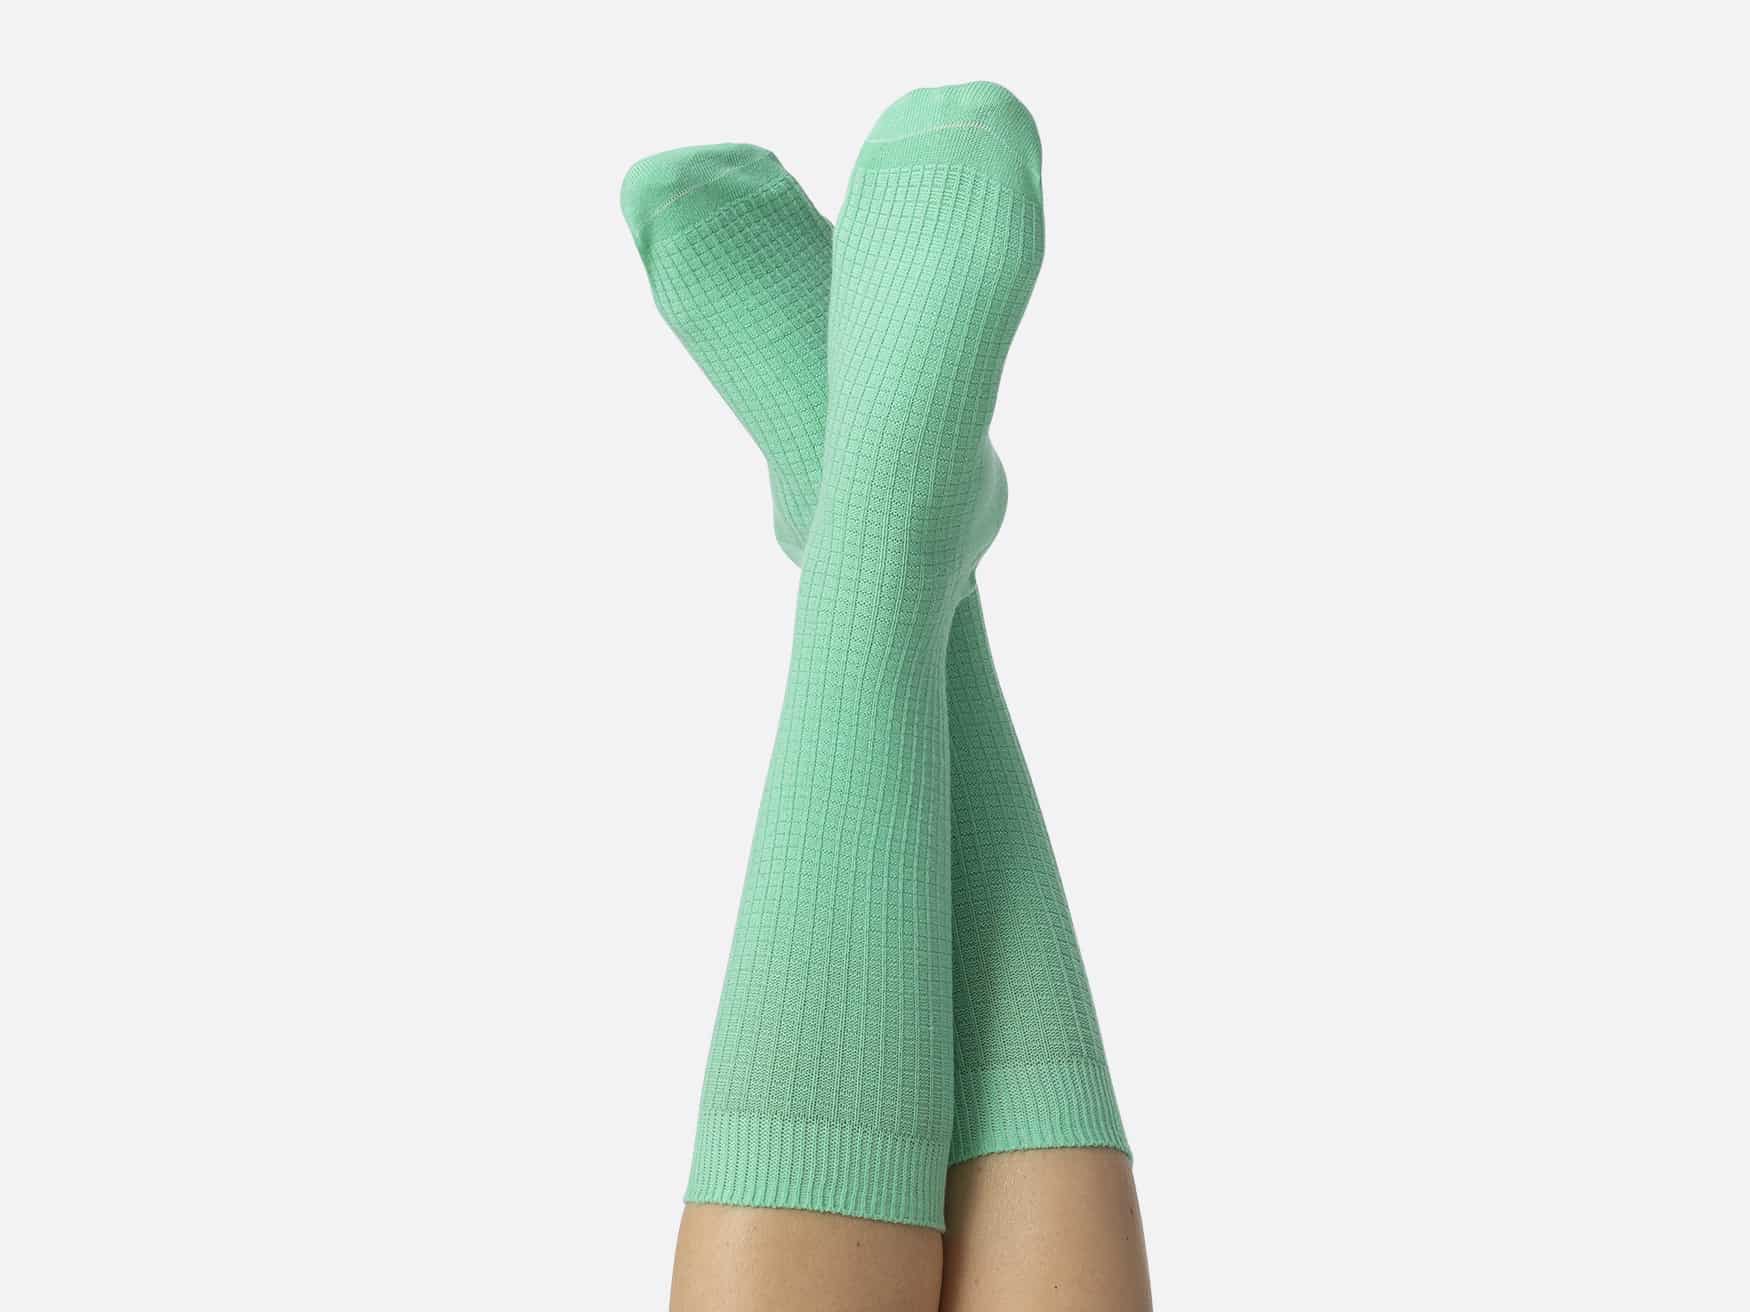 Yoga mat socks green